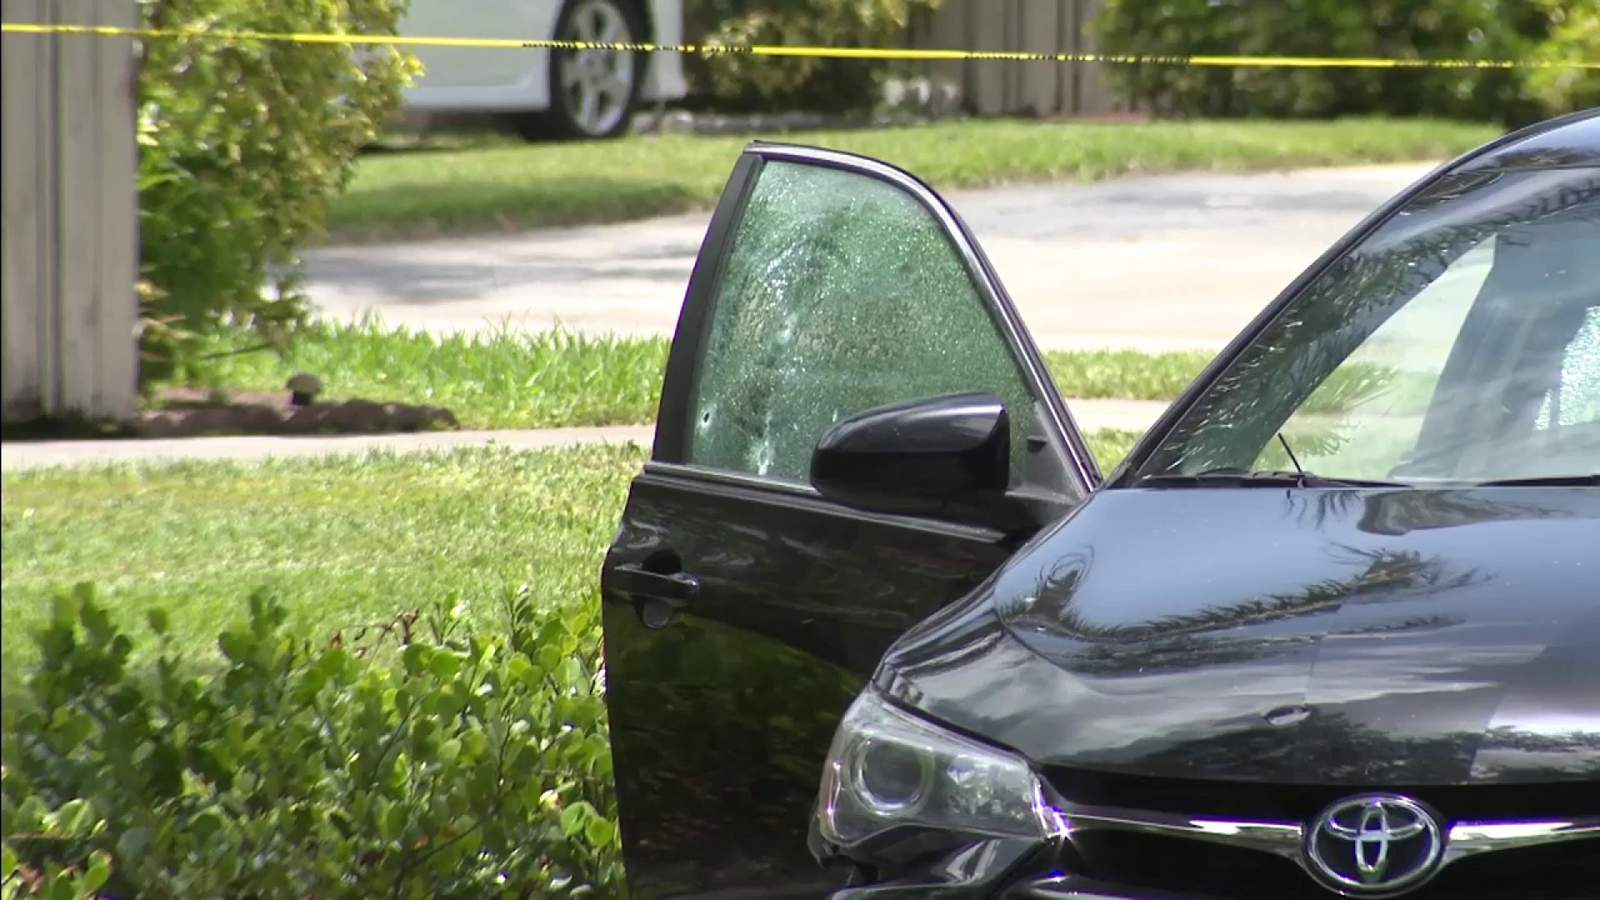 Police find man shot multiple times in car in NE Miami-Dade